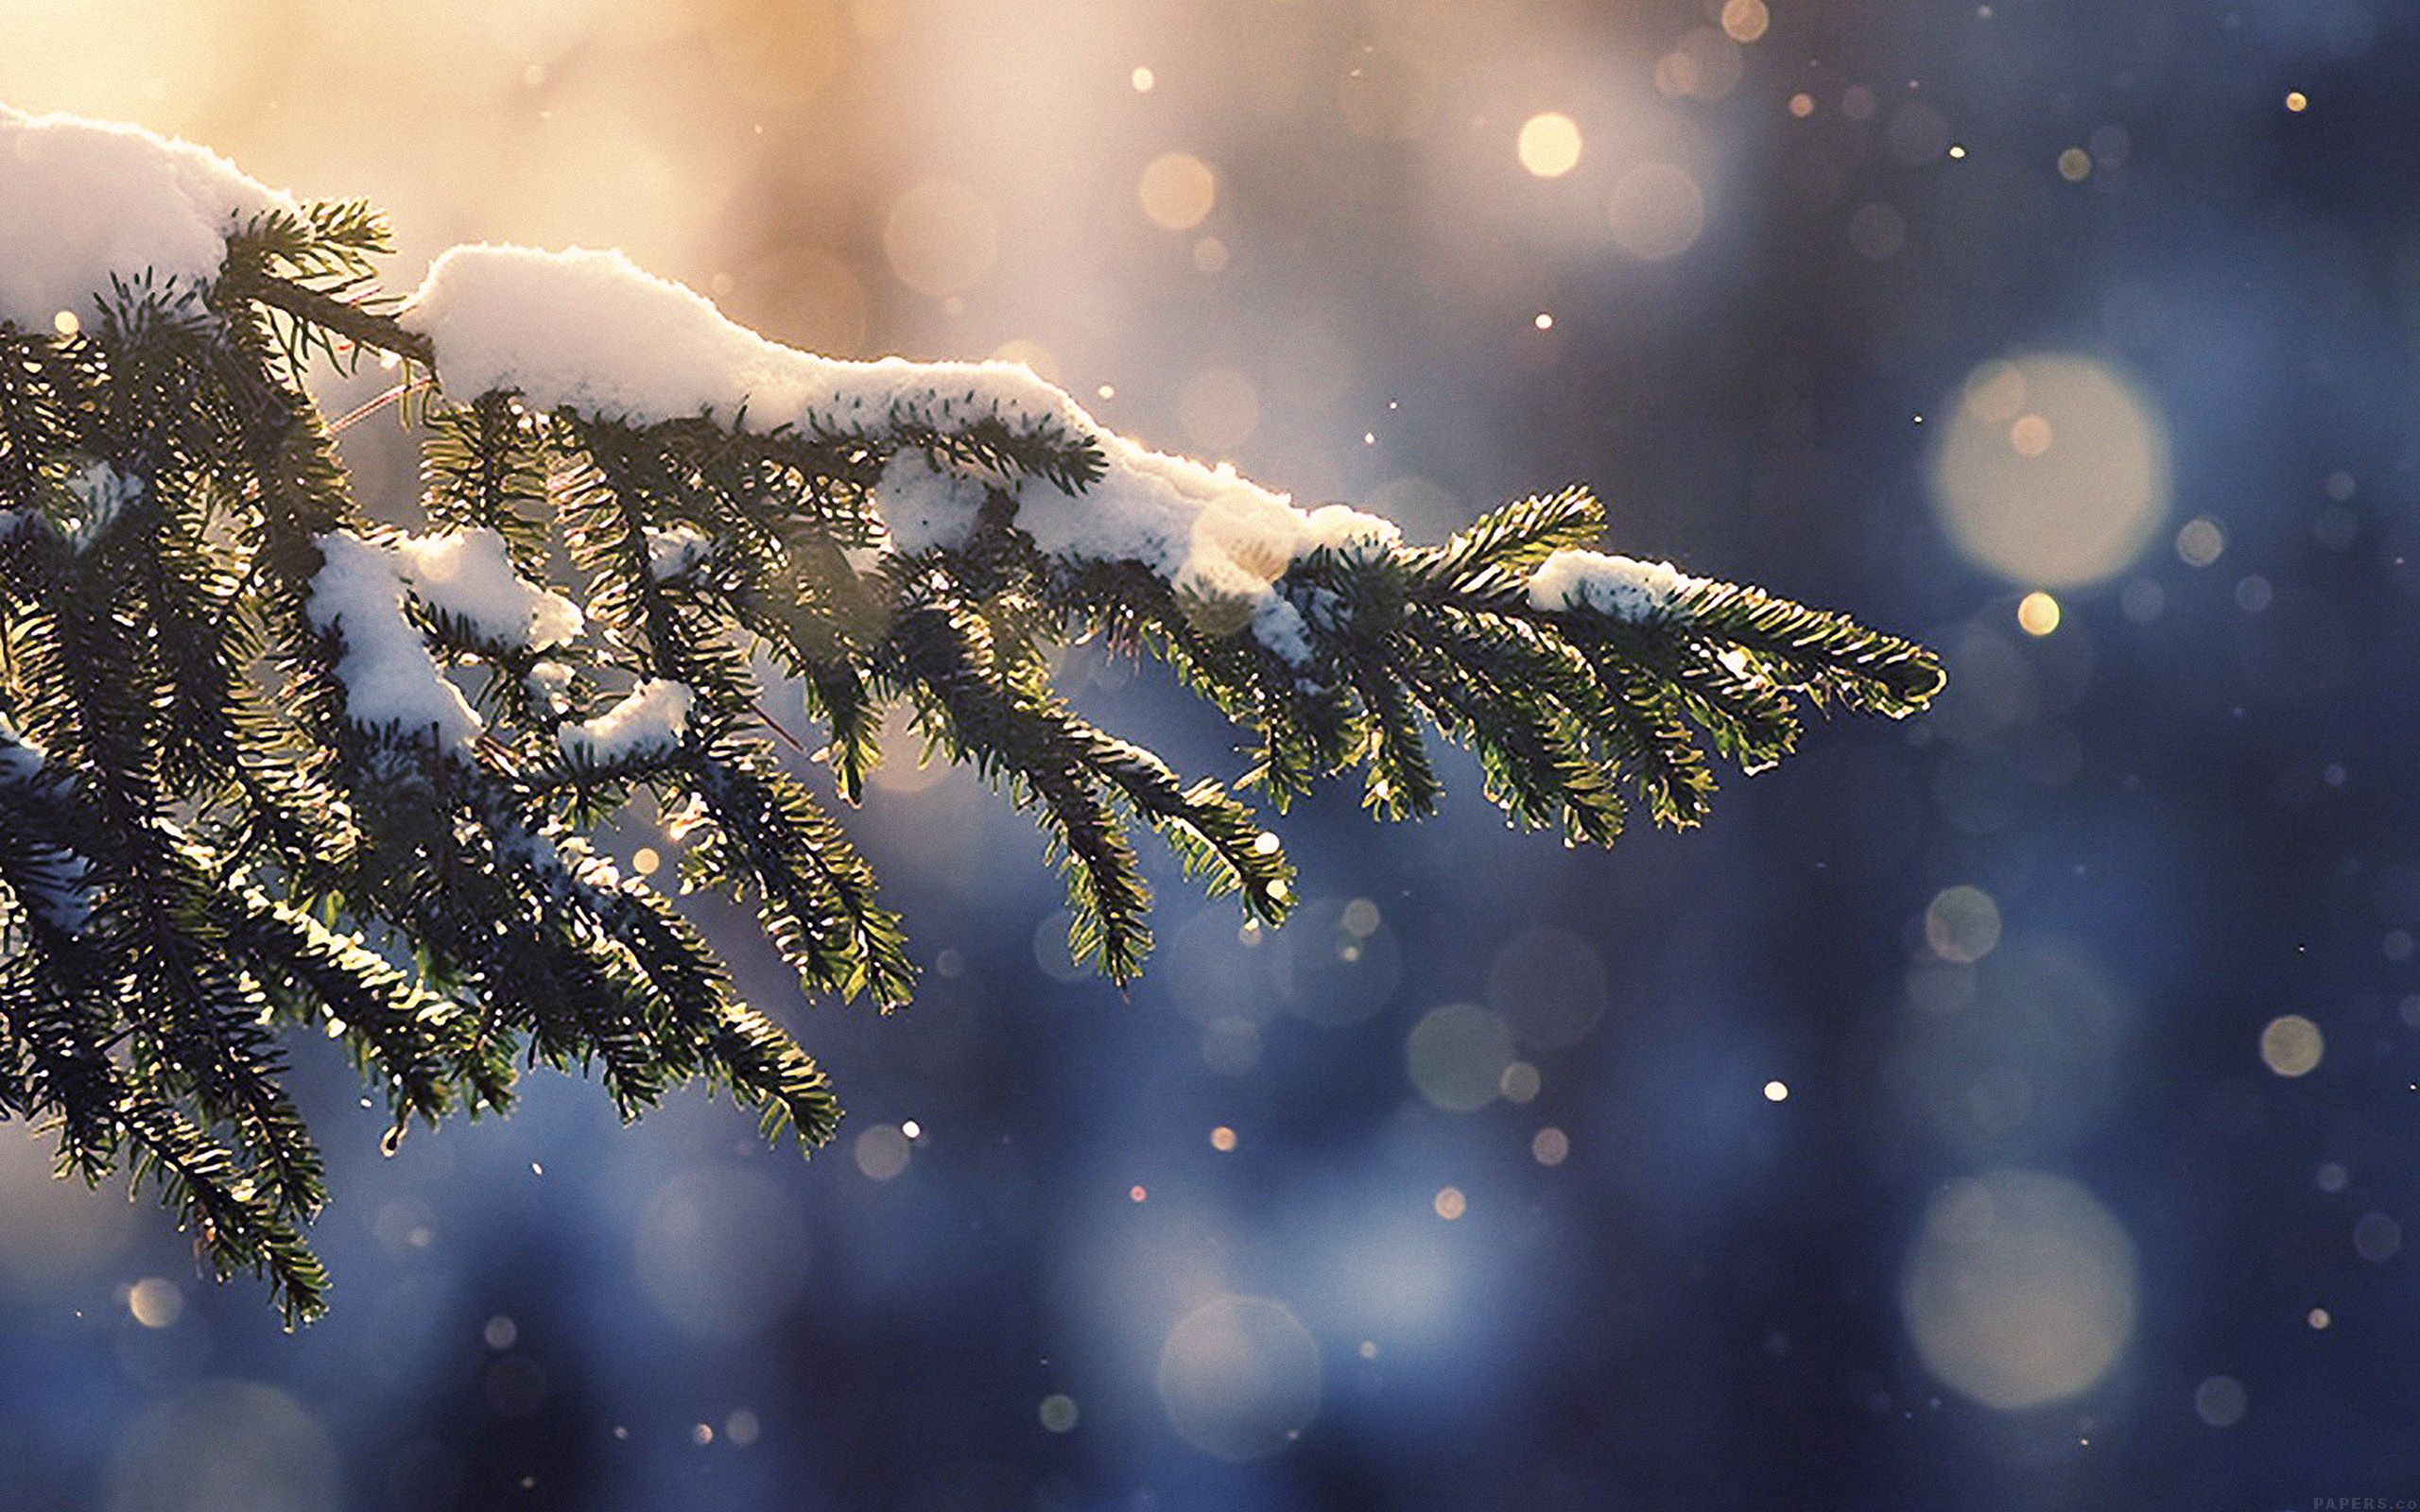  Winter Weihnachten Hintergrundbild 2560x1600. wallpaper for desktop, laptop. snowing tree blue christmas winter nature mountain